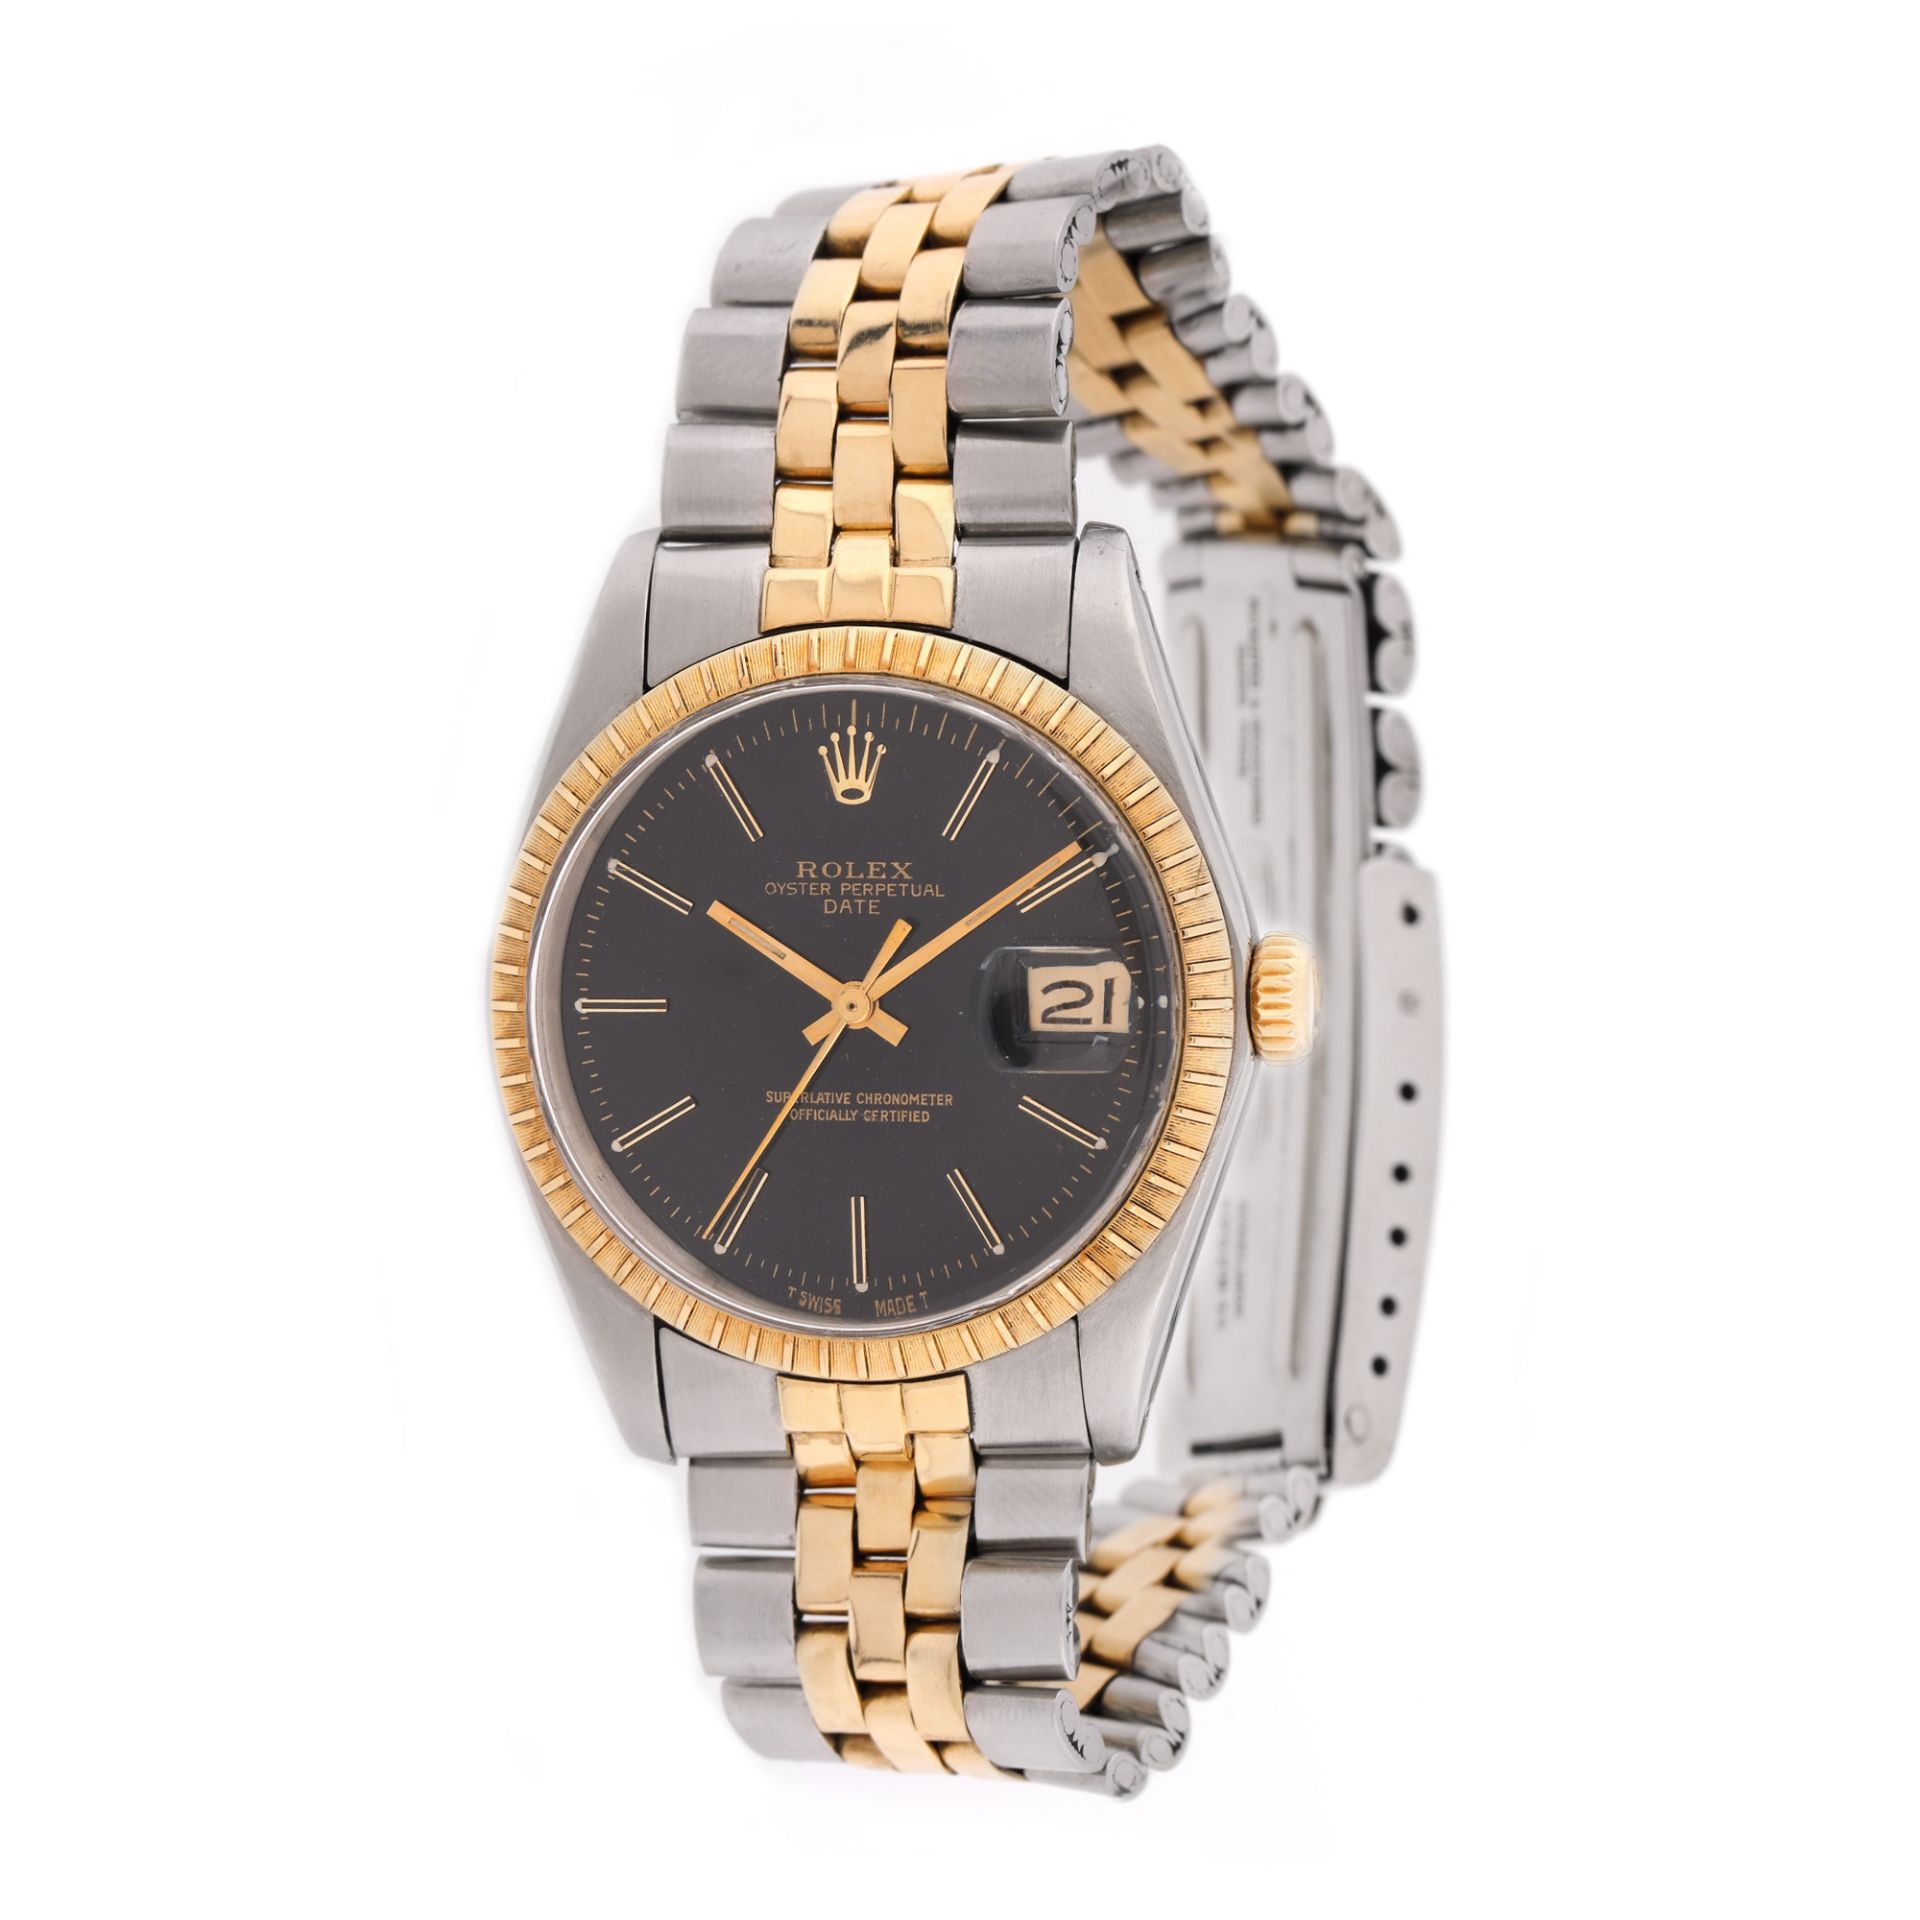 Rolex Oyster Date wristwatch, unisex, provenance documents and original box